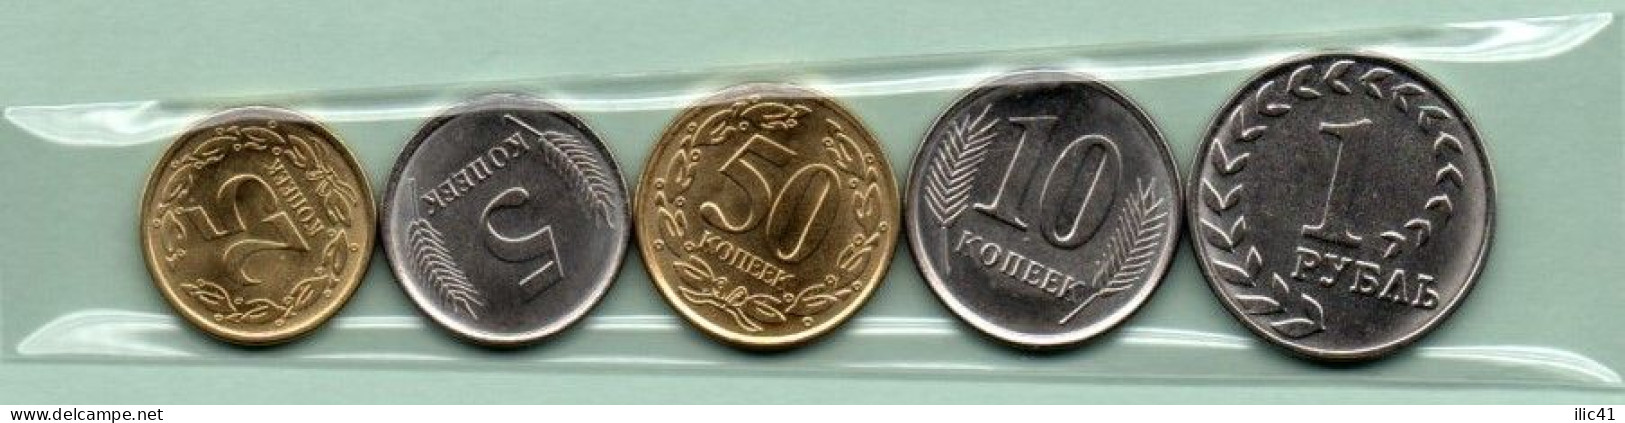 Moldova Moldova Transnistria 2020  Coins  "Change Coins Of Transnistria" UNC - Moldavie